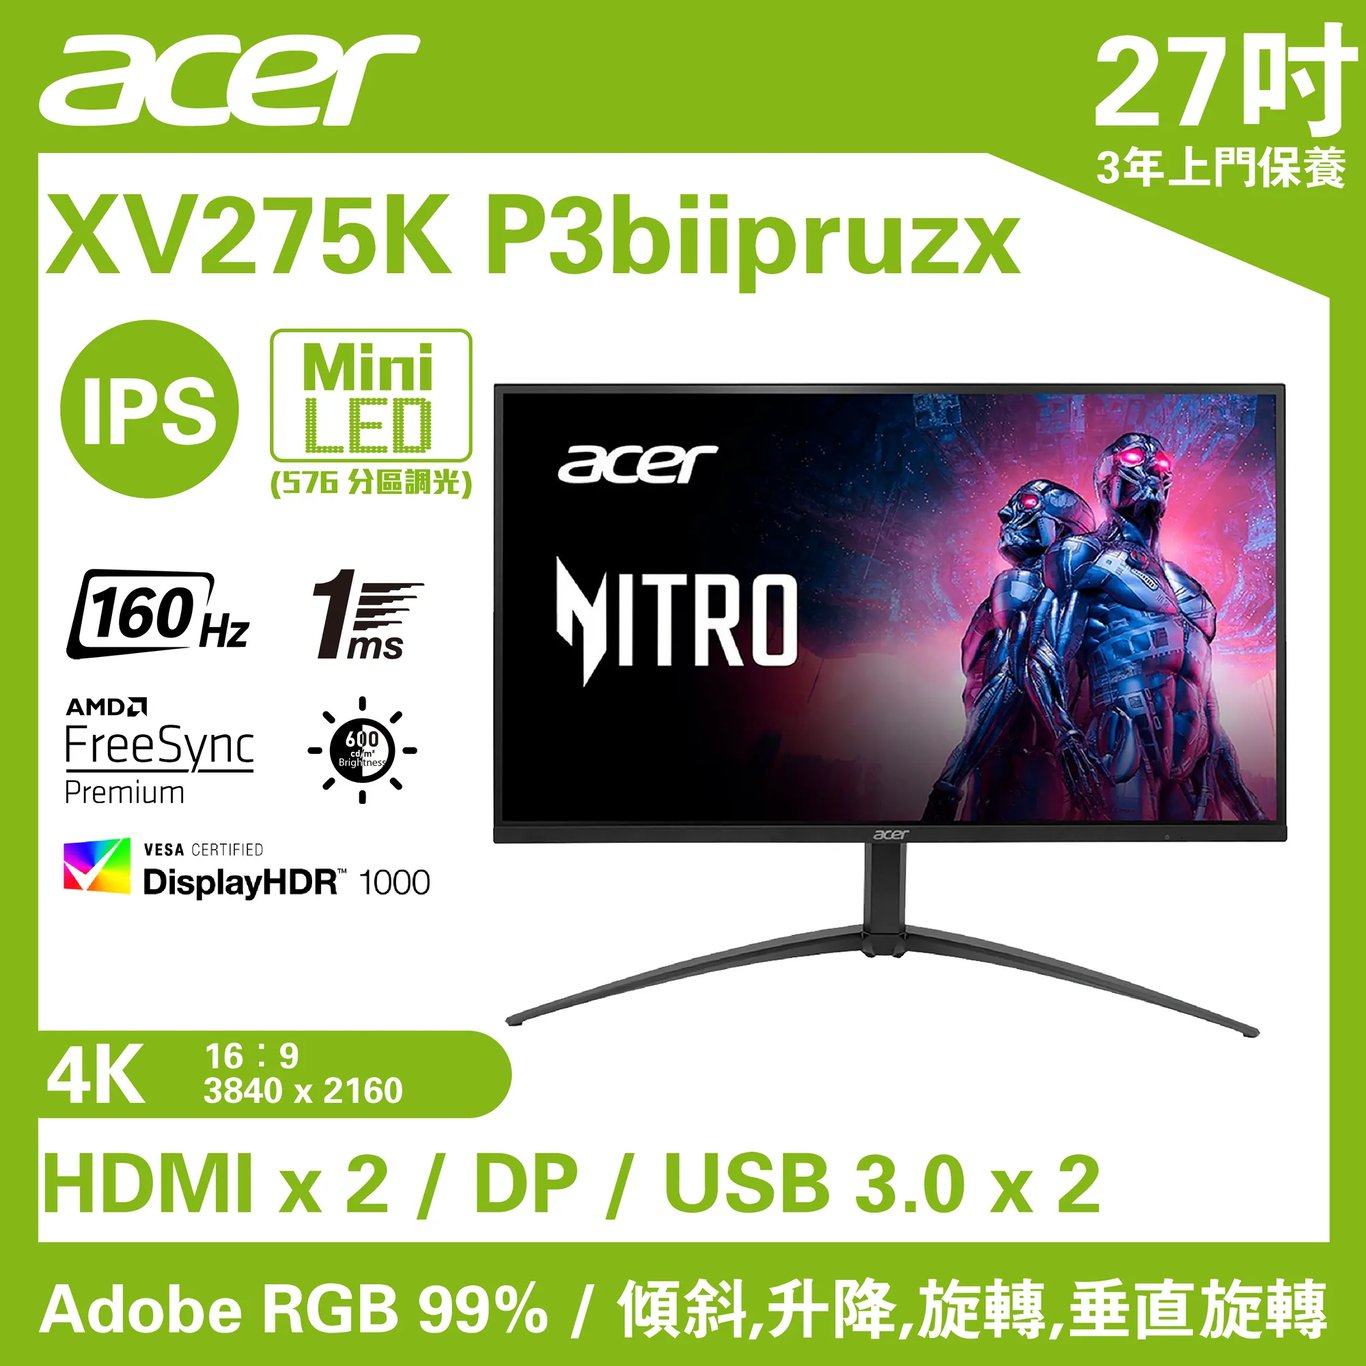 Acer NITRO XV275K P3biipruzx 